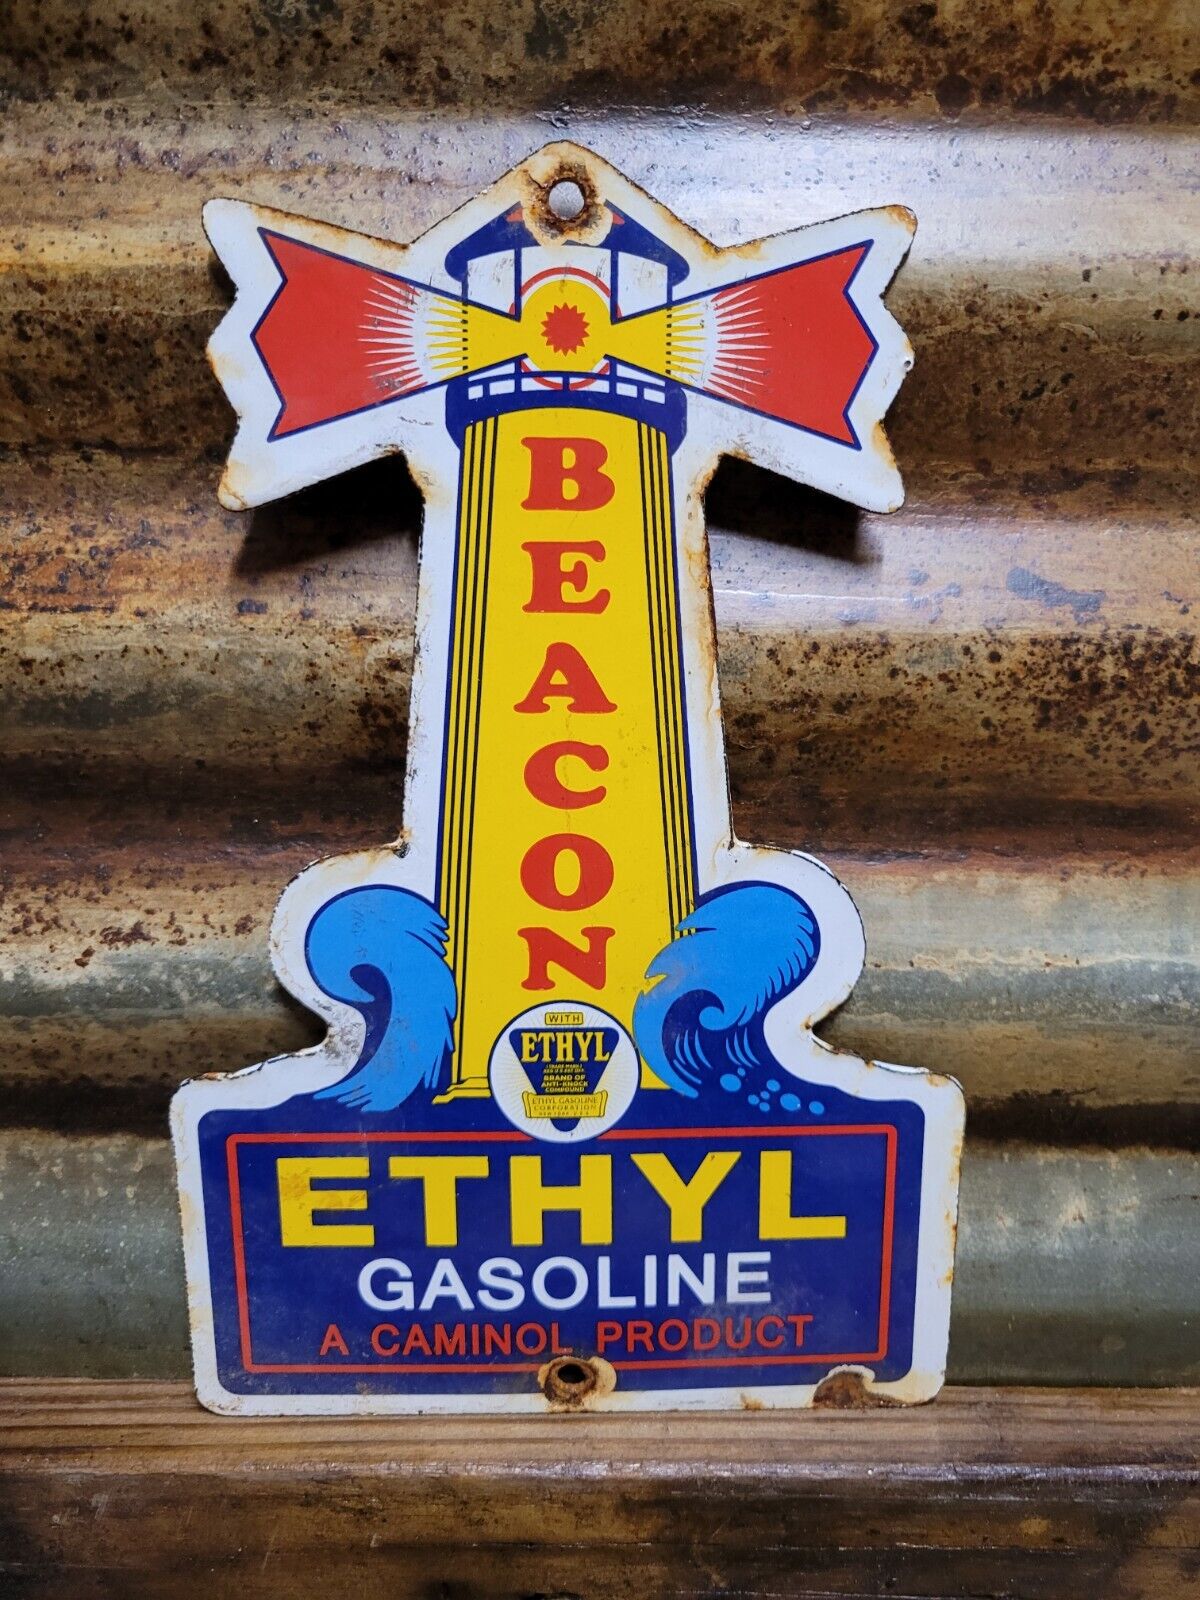 VINTAGE ETHYL PORCELAIN SIGN BEACON NEW YORK CAMINOL GAS OIL SERVICE COMPANY